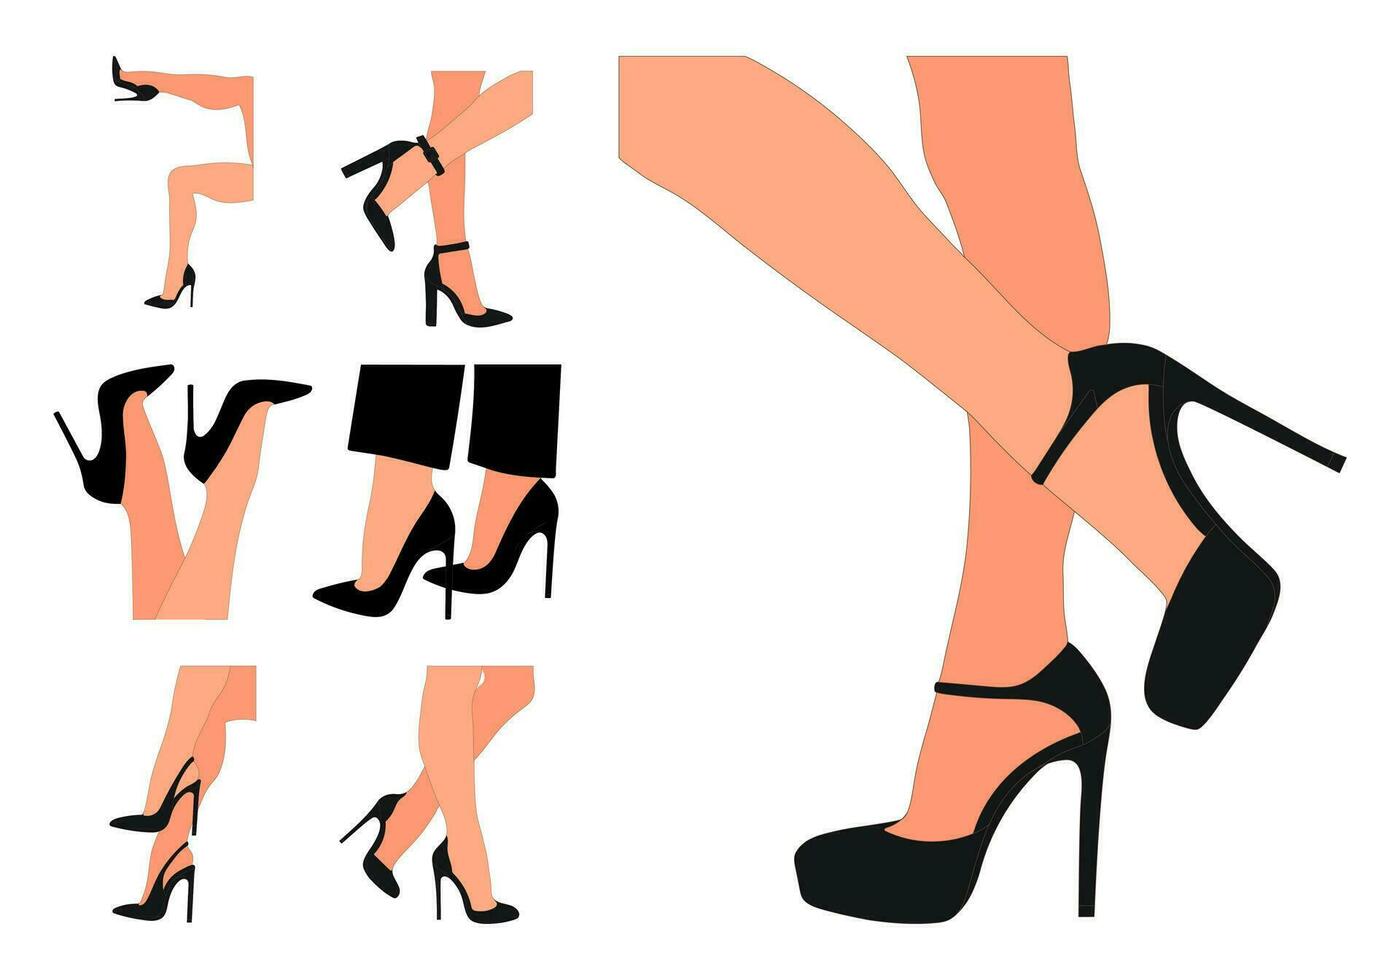 esbelto, joven hembra piernas en un pose. Zapatos tacones de aguja, alto tacones caminando, de pie, correr, saltando, bailar. mujer zapato modelo vector